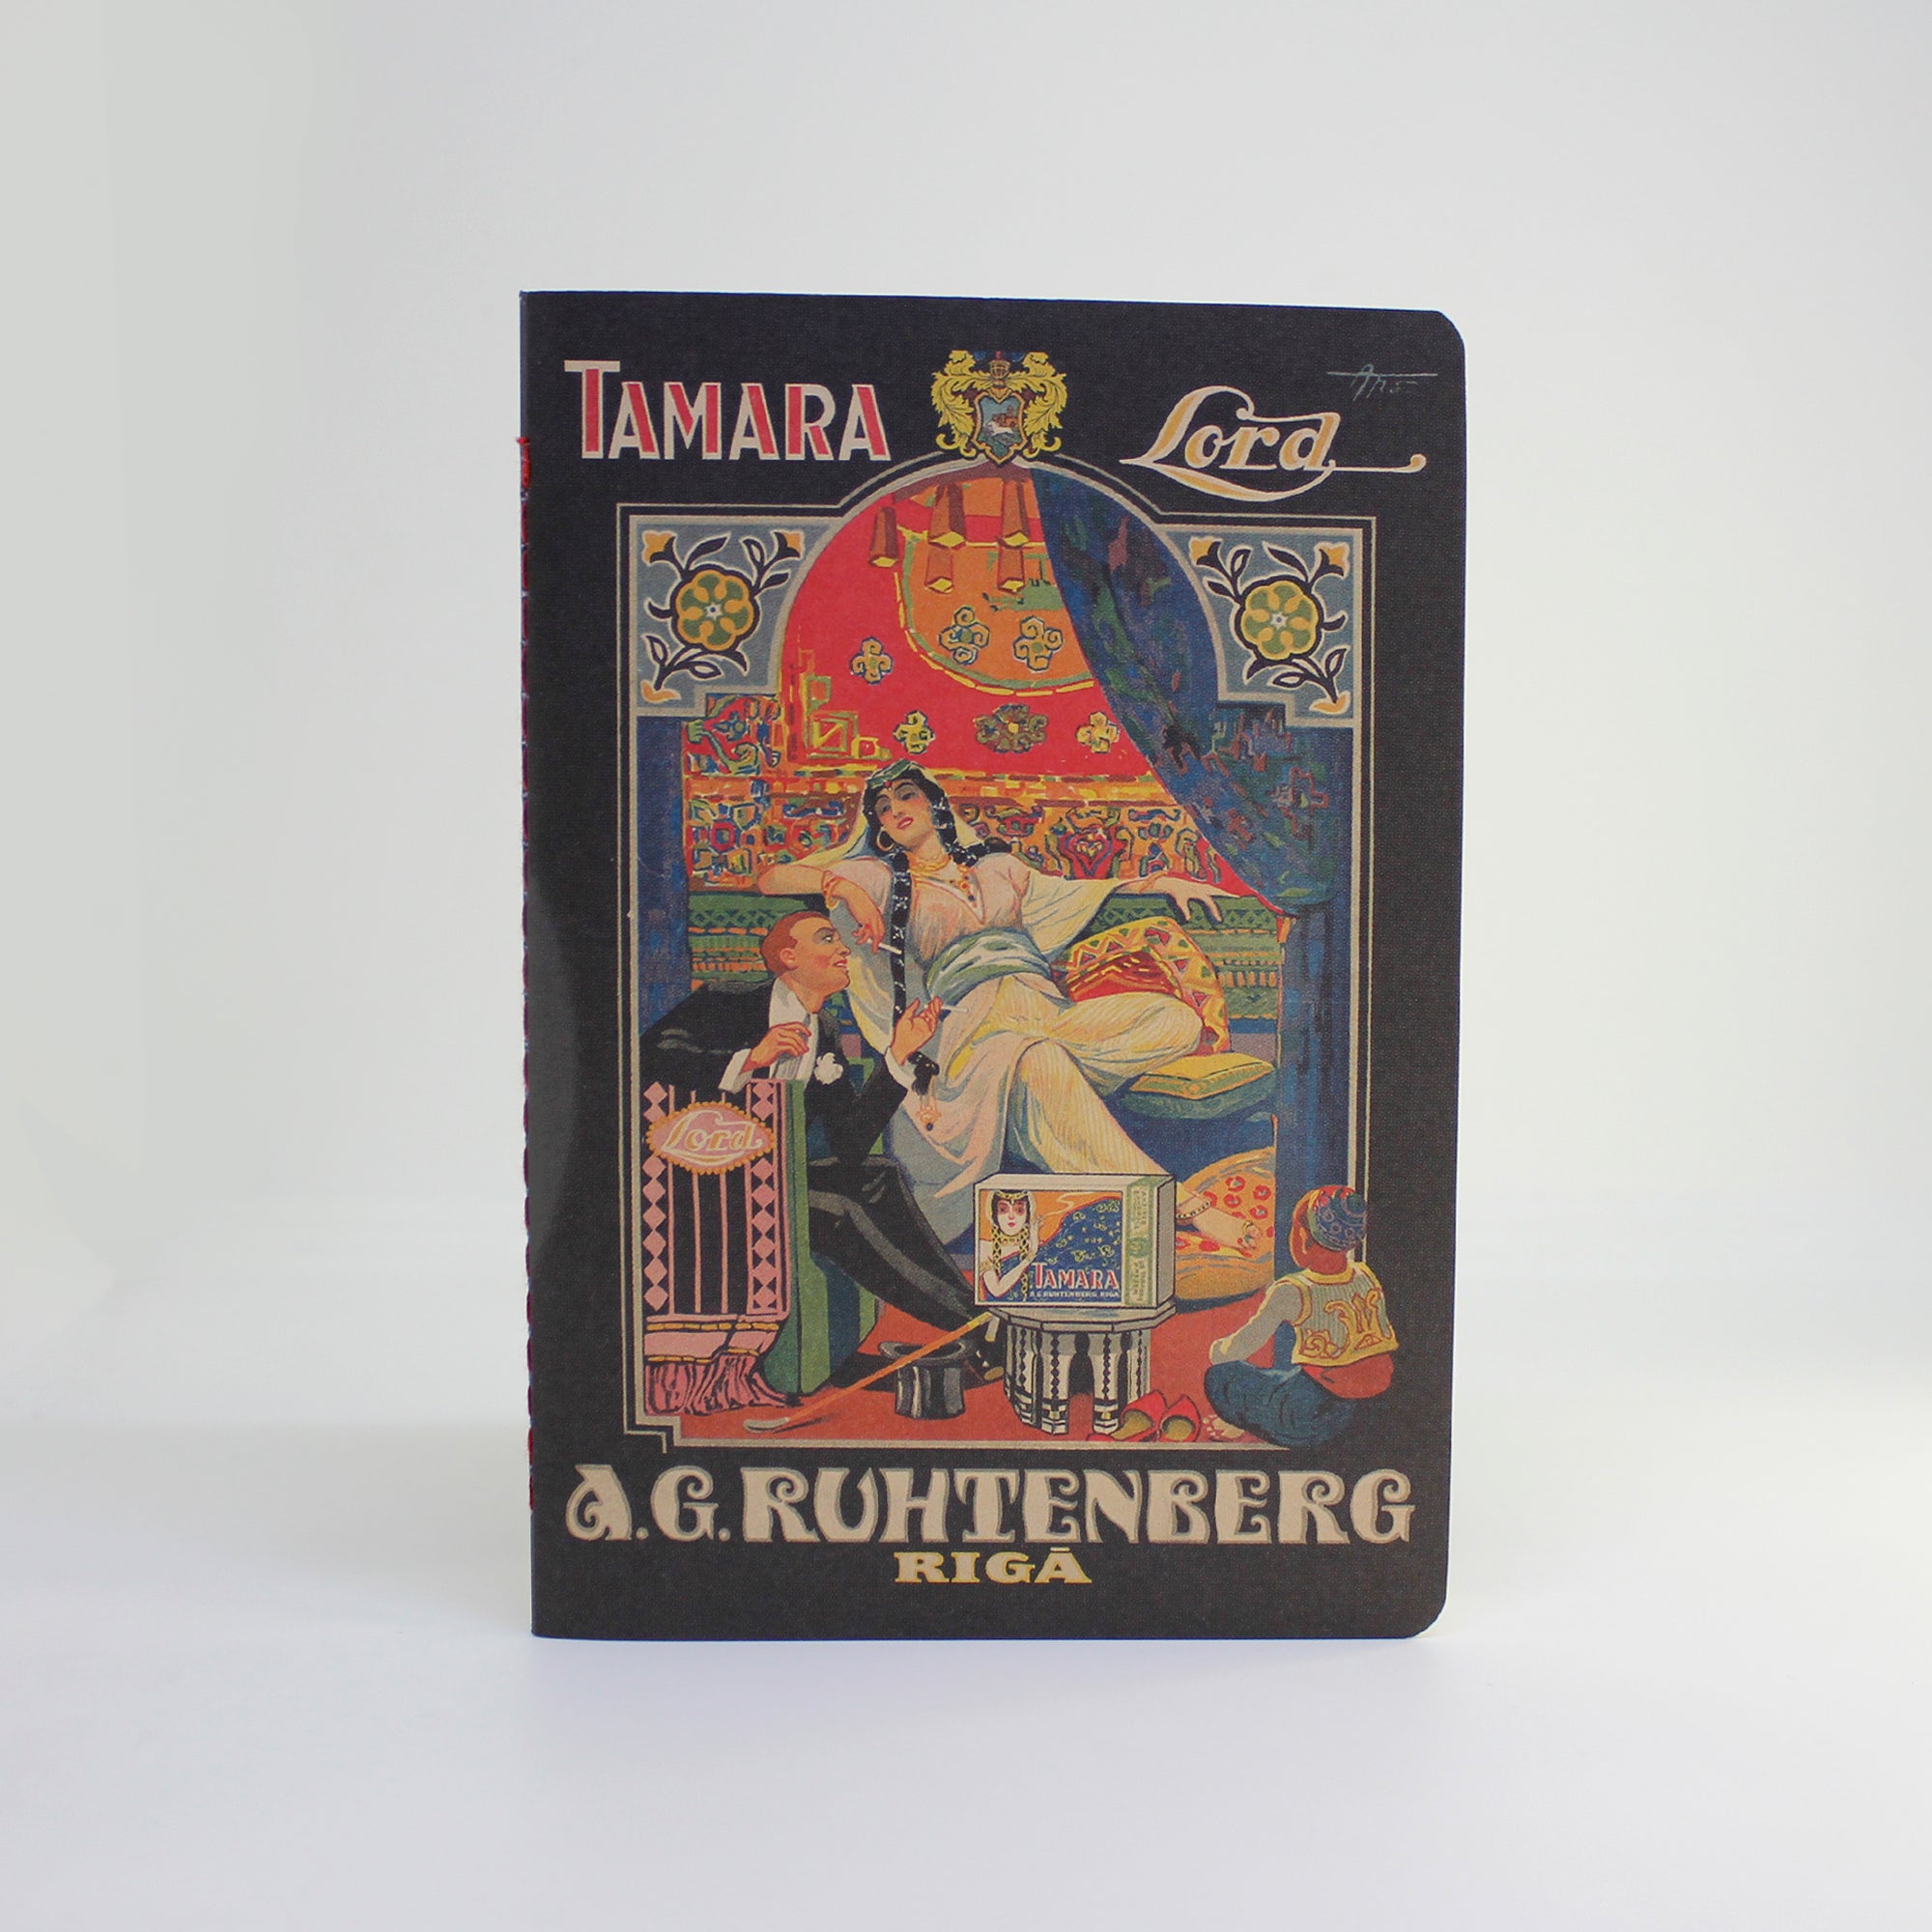 Small notebook - Cigarettes Tamara and Lord